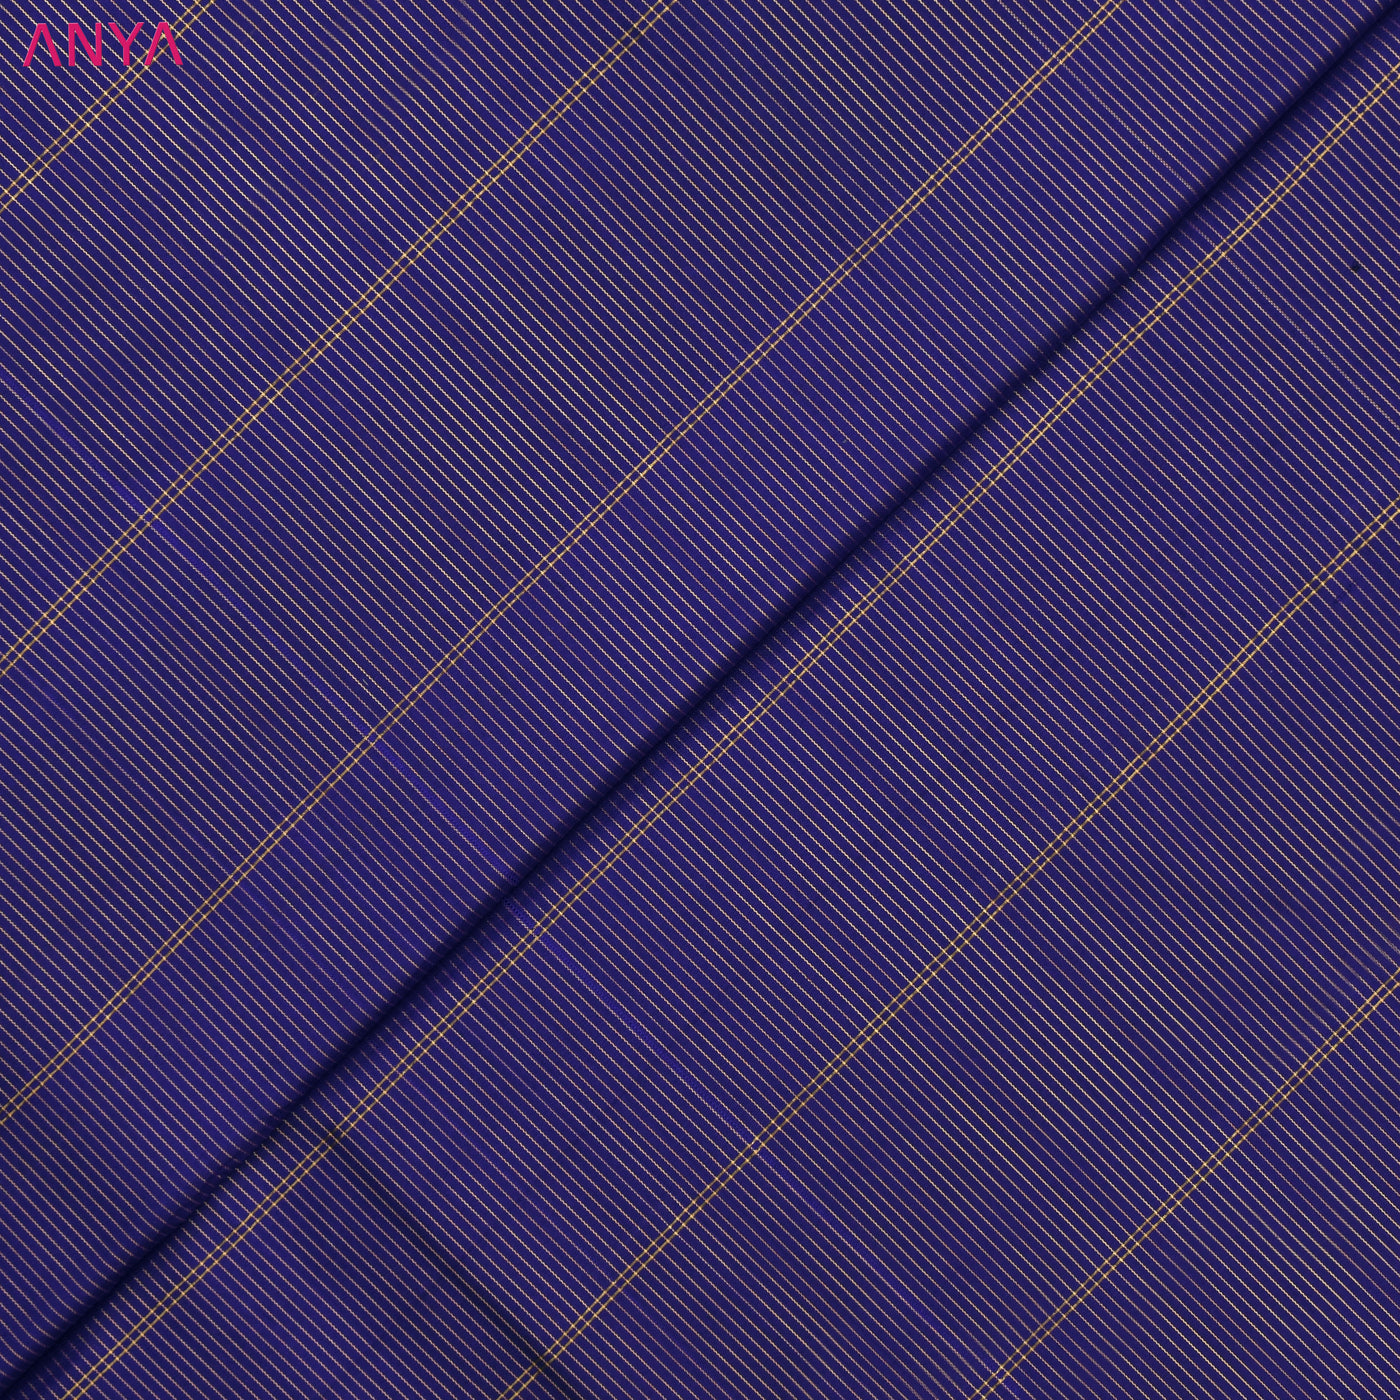 MS Blue Kanchi Silk Fabric with Vairaoosi Design